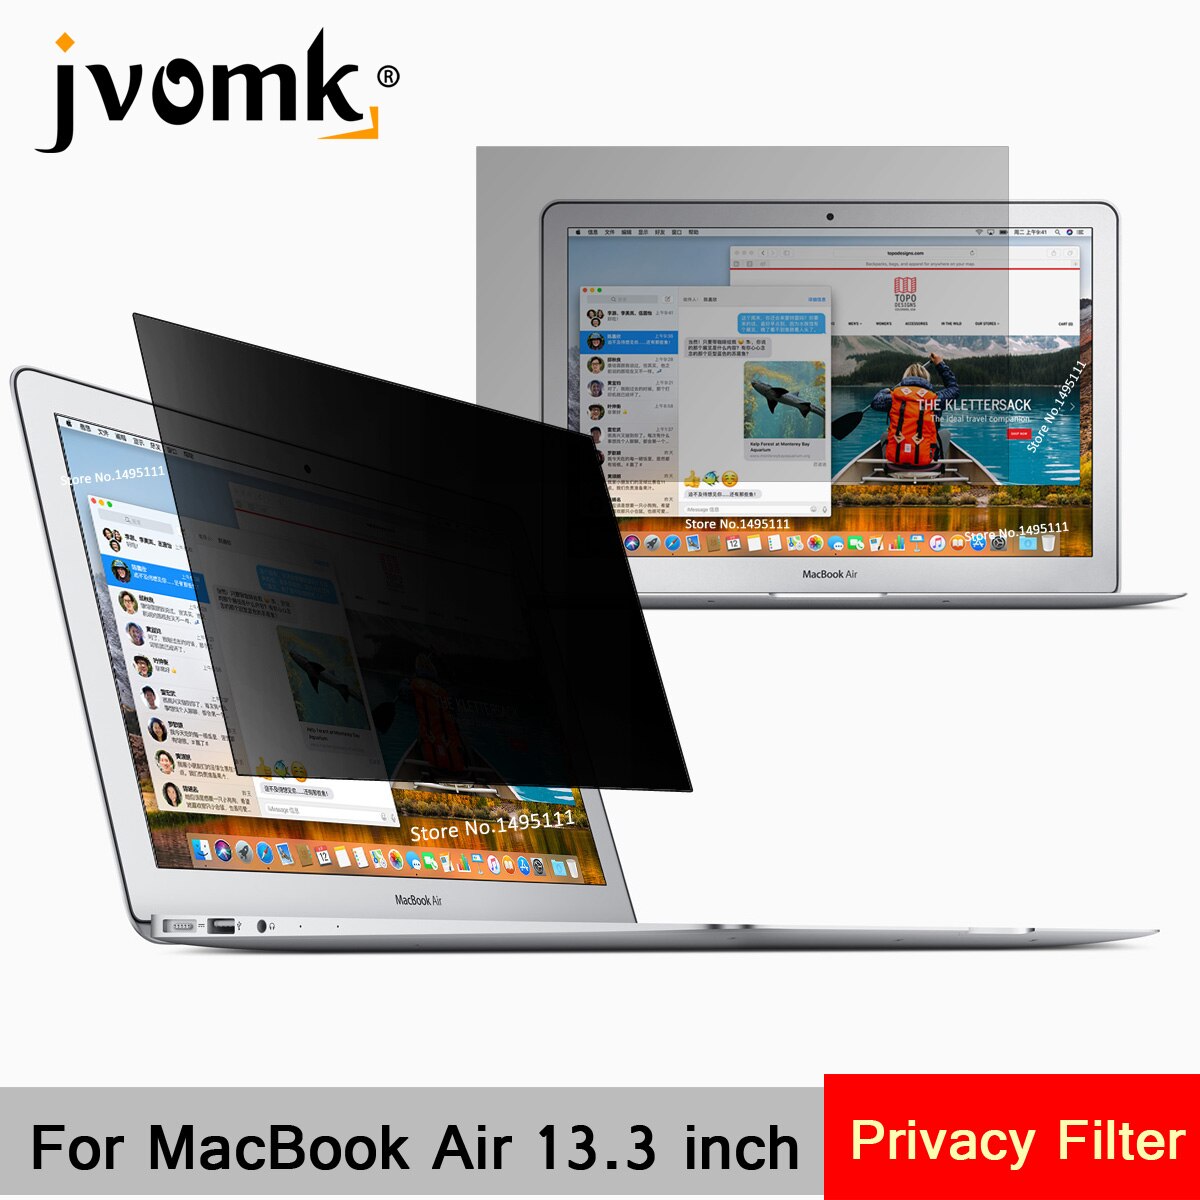 Voor Apple MacBook Air 13.3 inch (286mm * 179mm) privacy Filter Laptop Notebook Anti-glare Screen protector Beschermende film